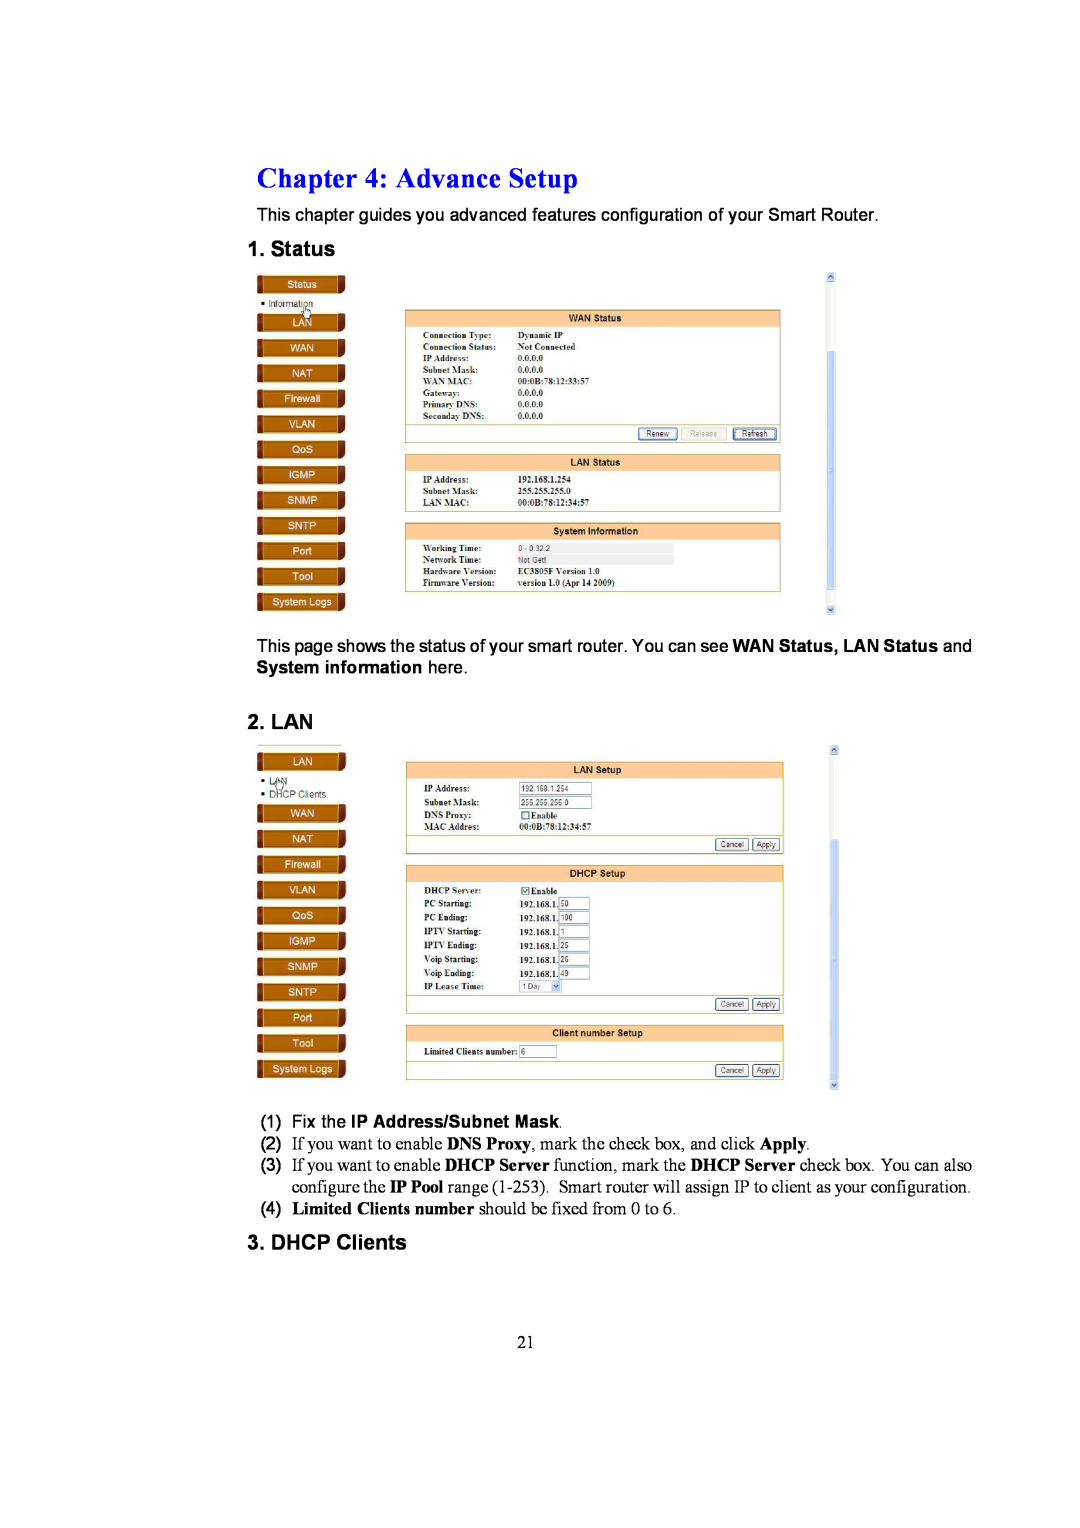 Accton Technology EC3805 manual Status, Lan, DHCP Clients, Advance Setup, Fix the IP Address/Subnet Mask 